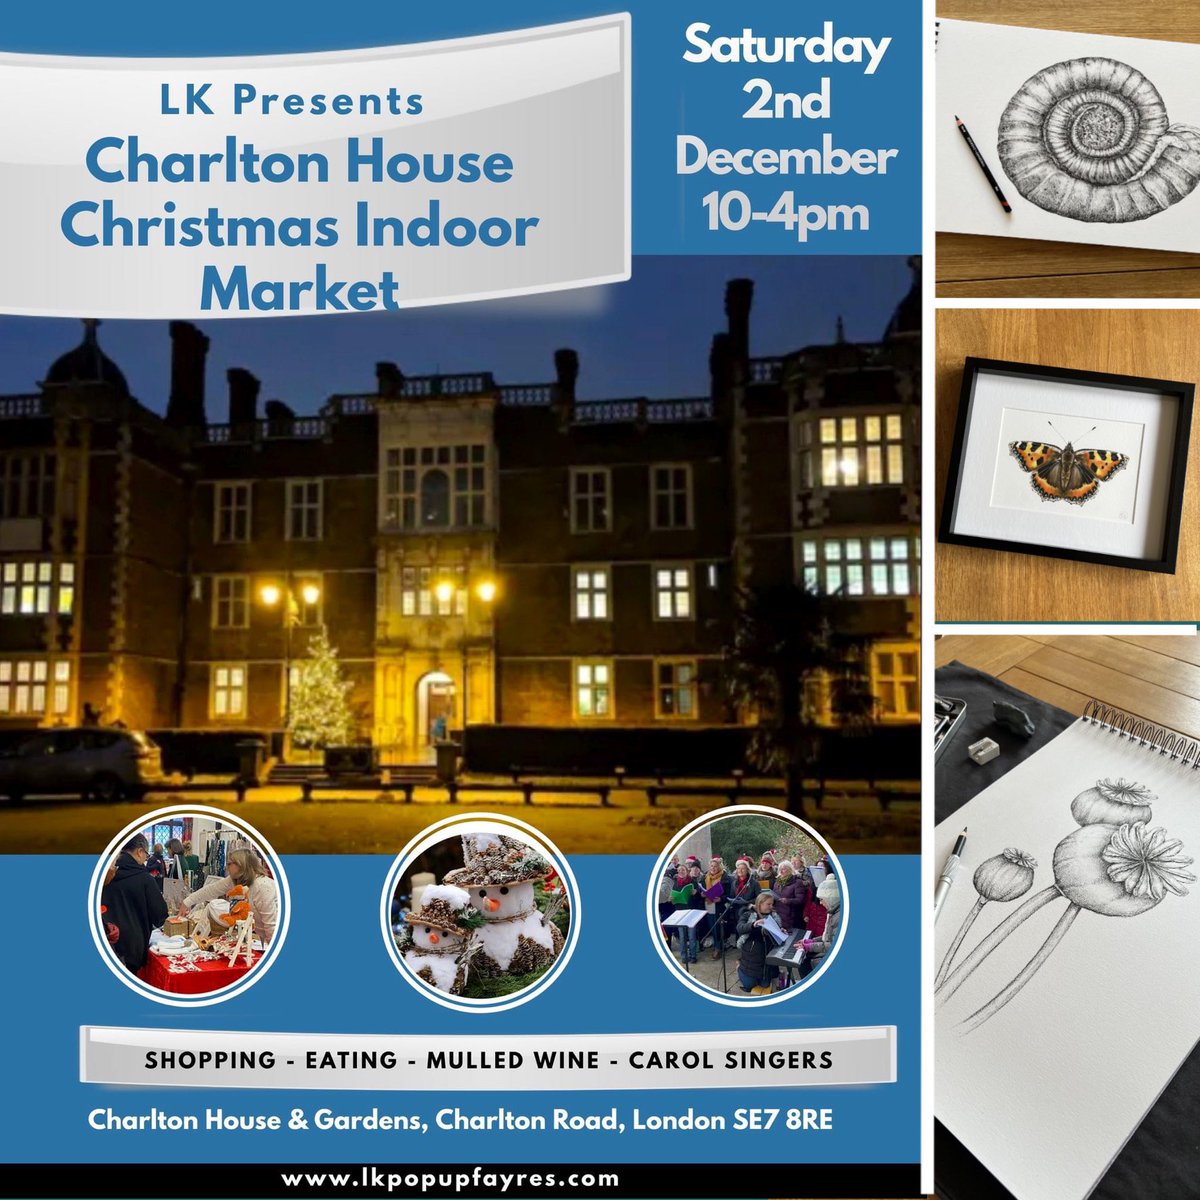 Event alert - Christmas Indoor Market @CharltonHouseGW this Saturday 2nd December. 10am to 4pm. #se7 #charlton #charltonhouse